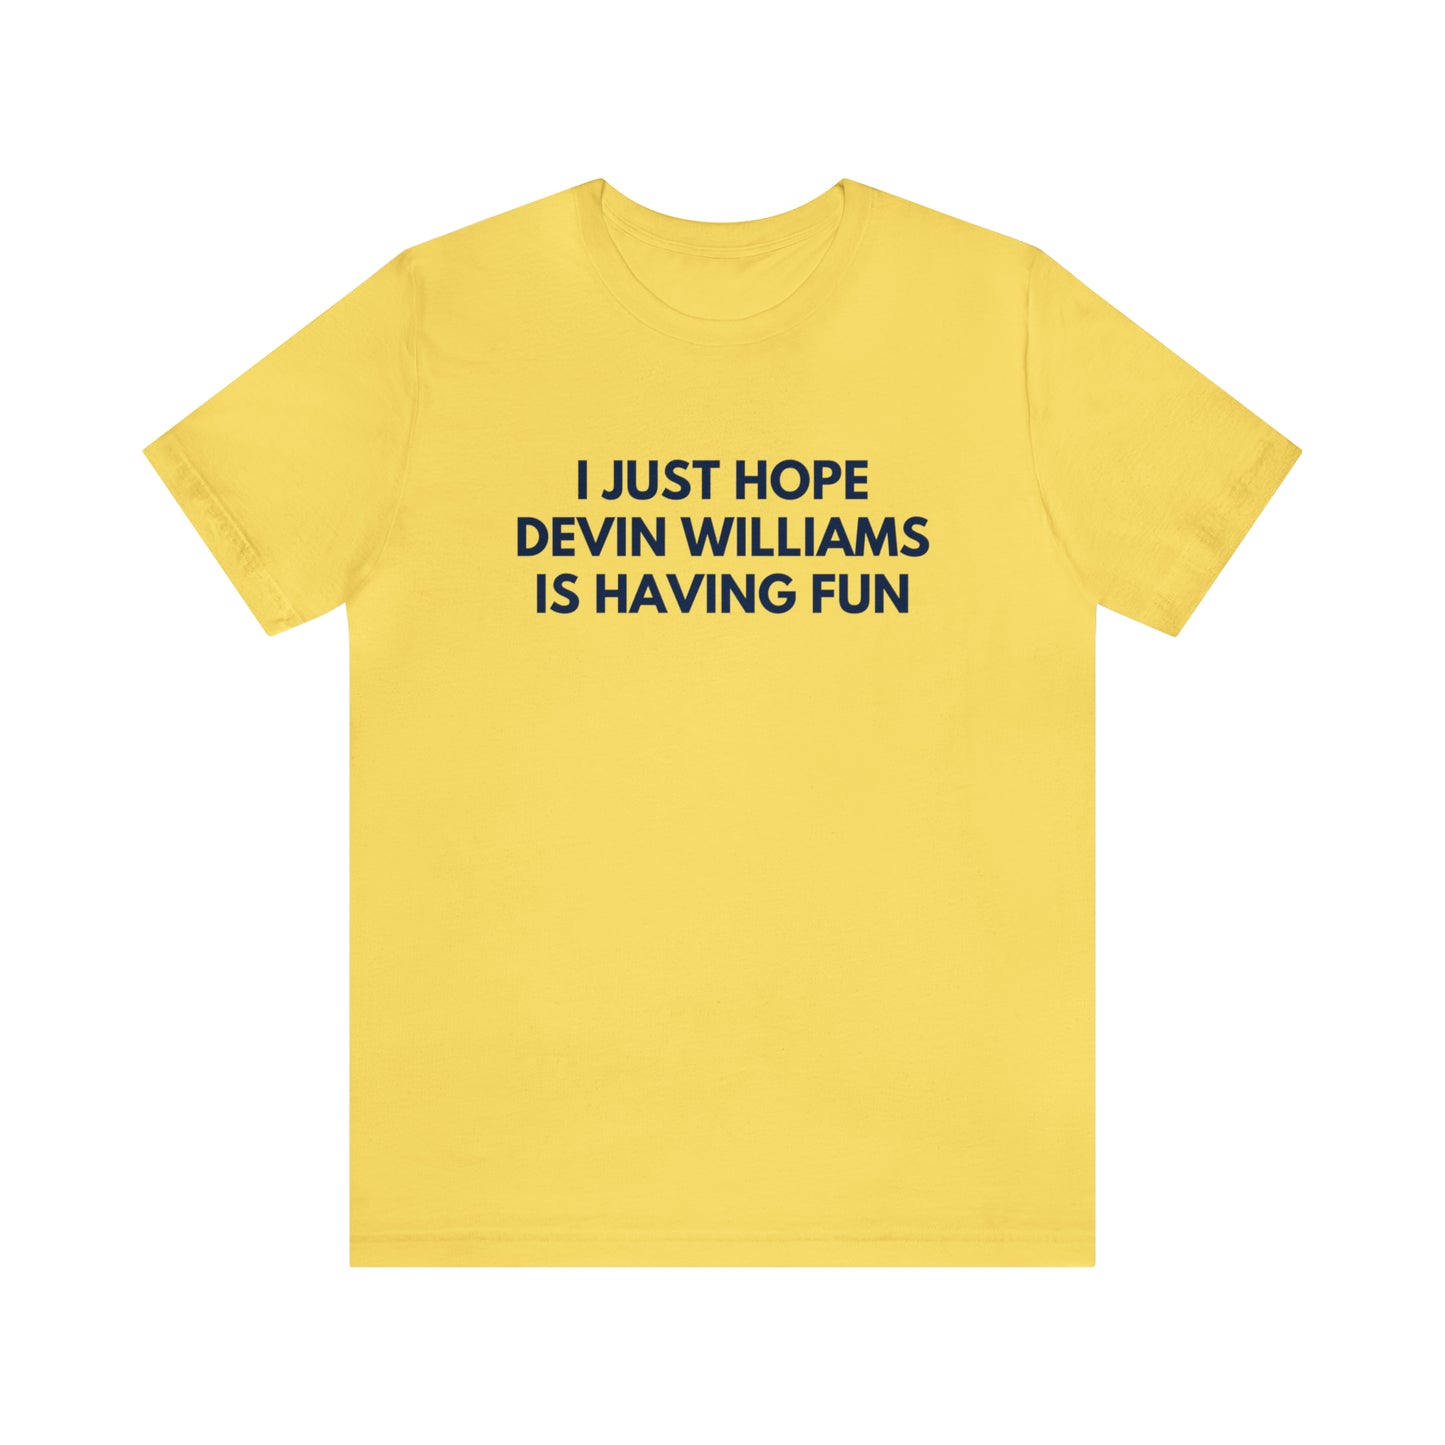 Devin Williams Having Fun - Unisex T-shirt